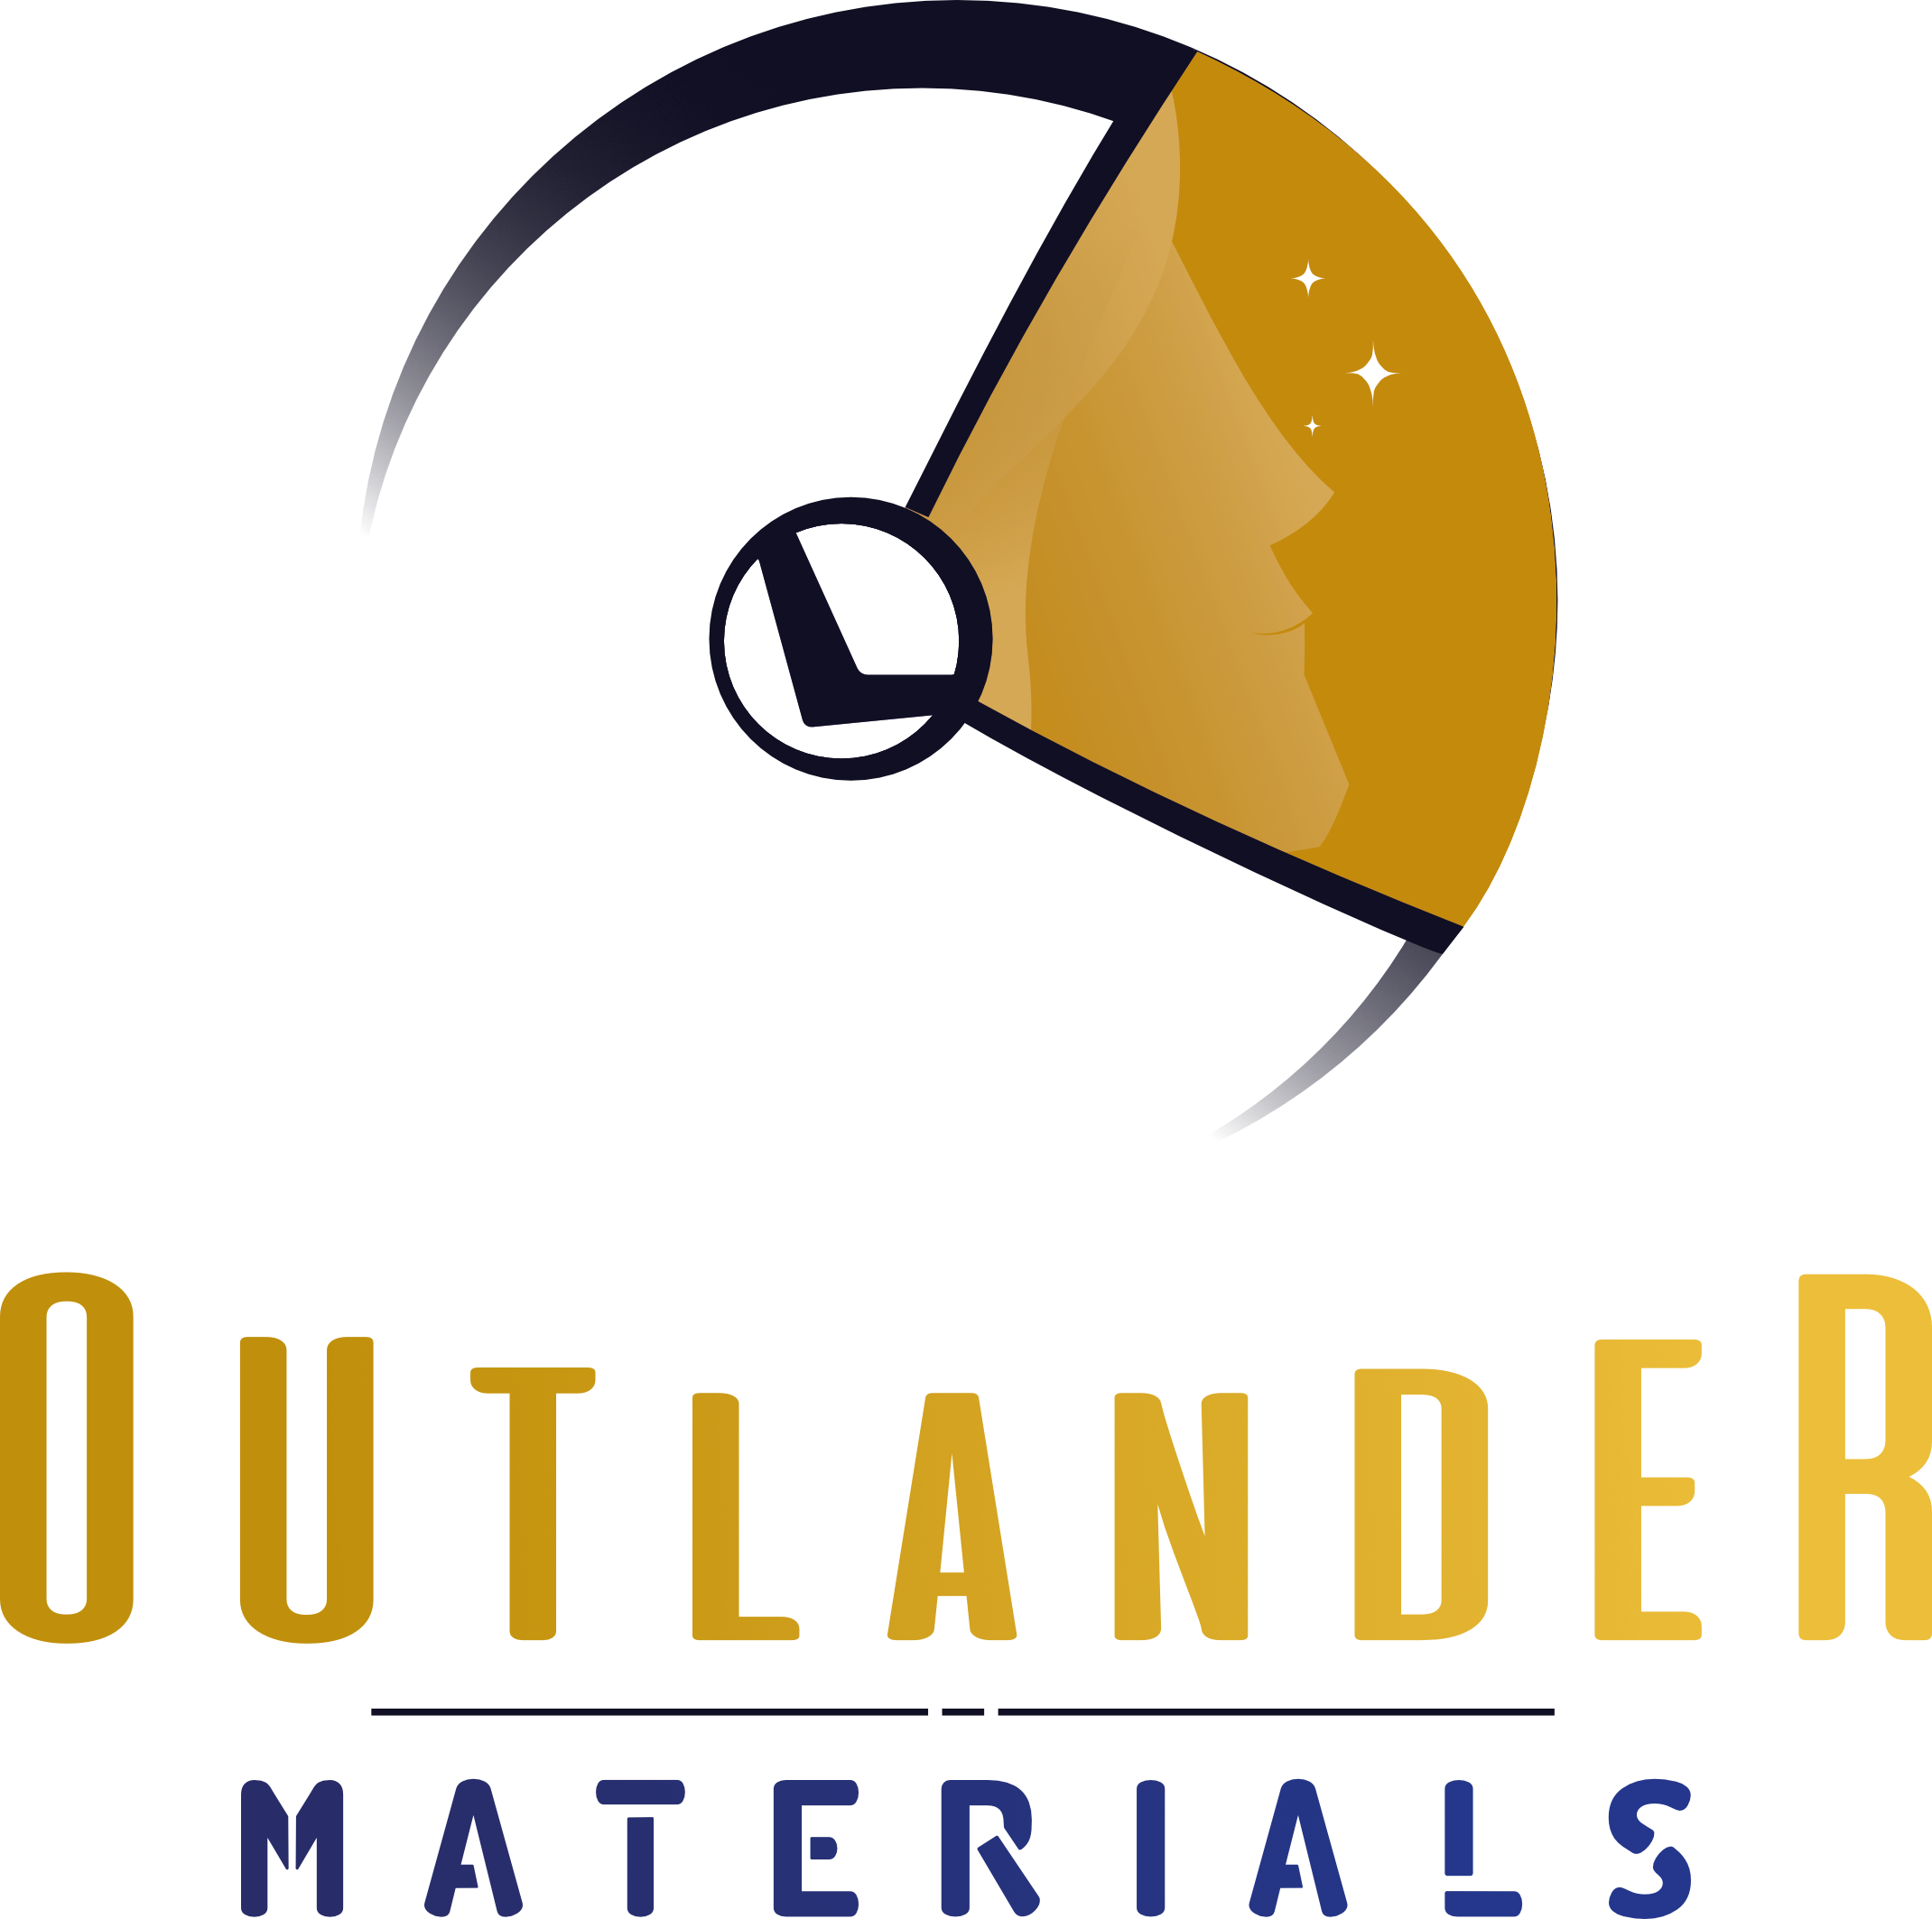 Outlander Materials